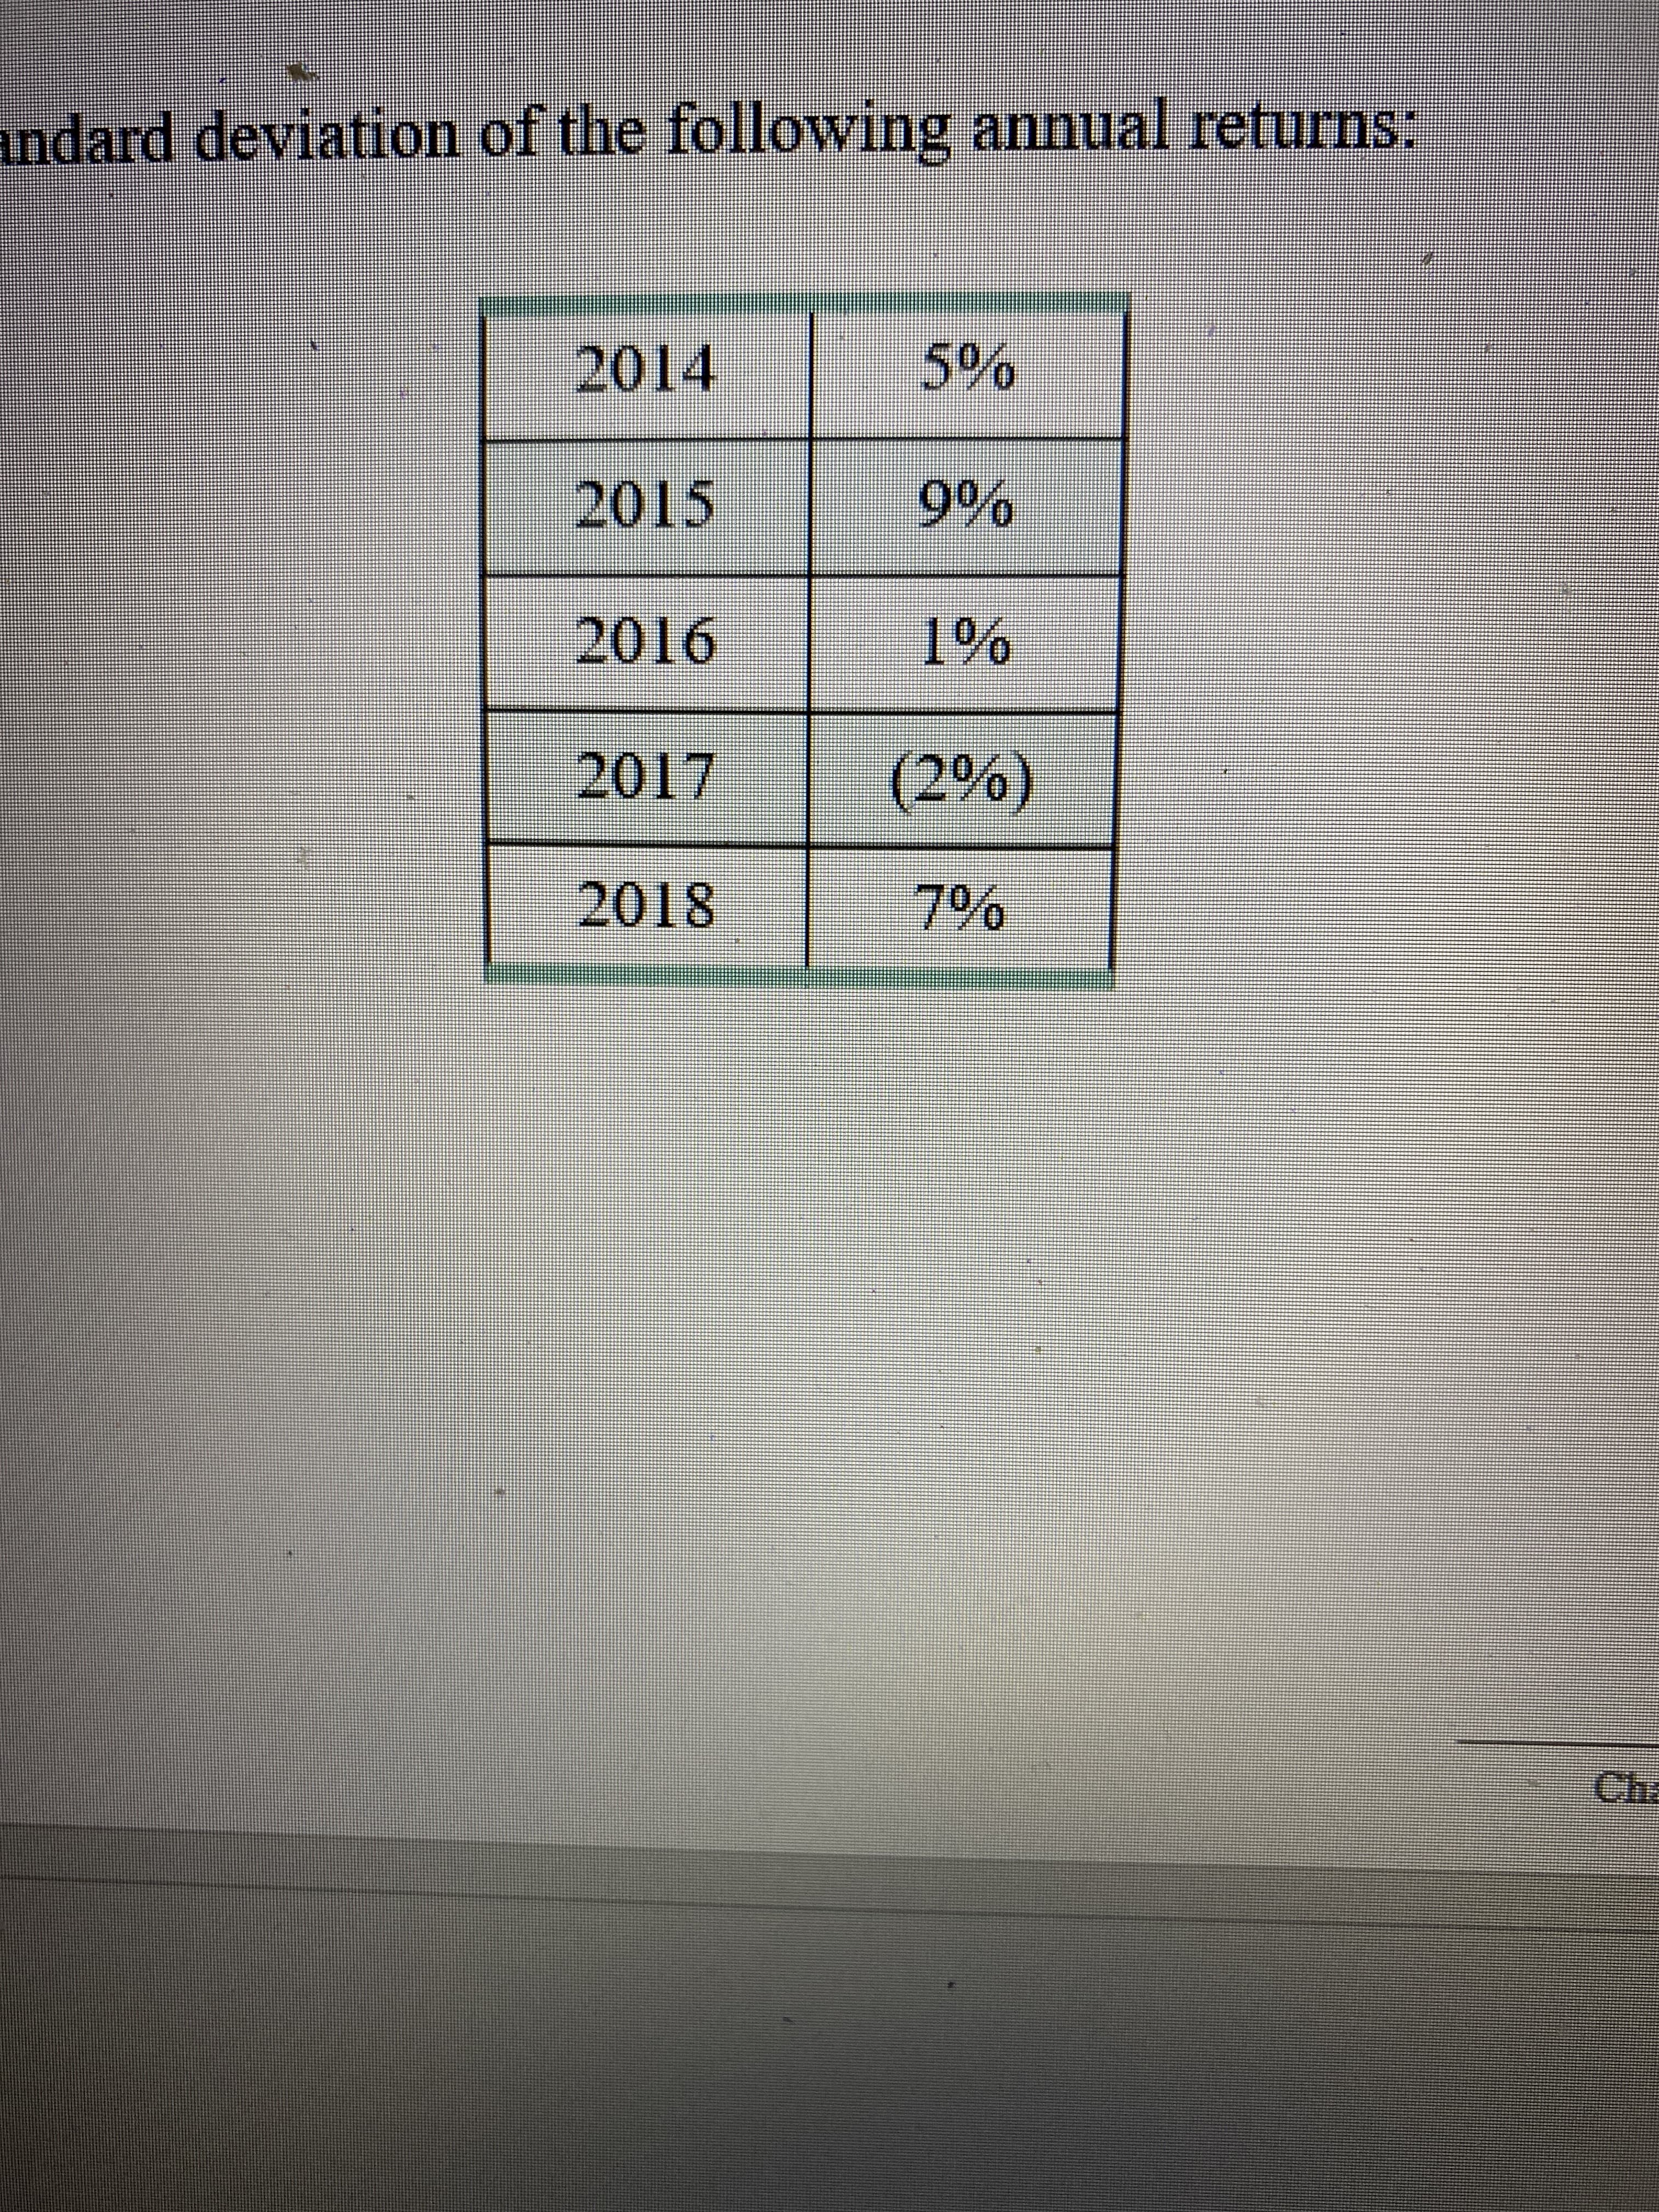 ndard deviation of the following annual returns:
